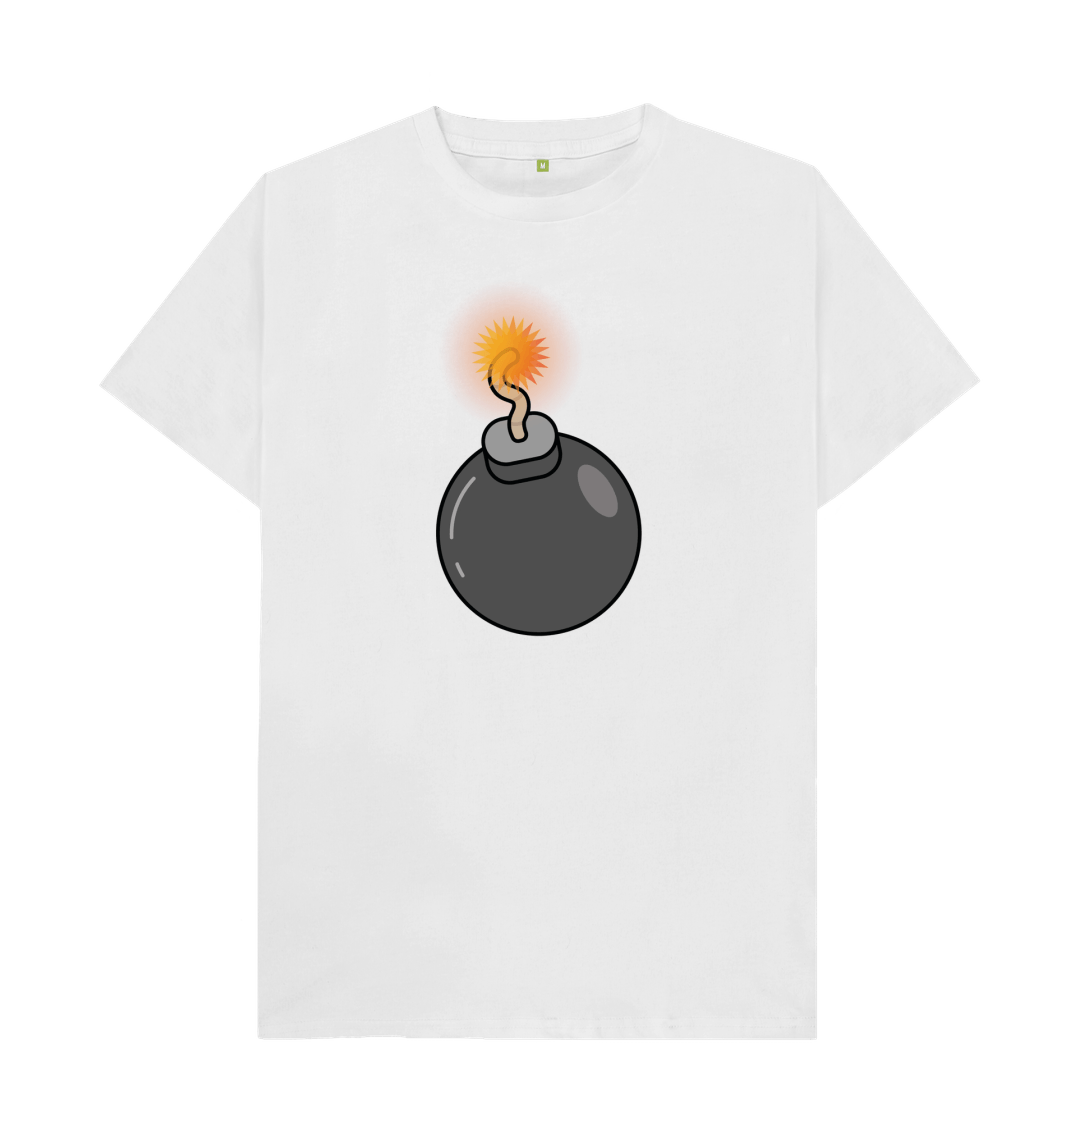 White Men's Cartoon Ticking Timebomb Organic Cotton Mental Health T-Shirt